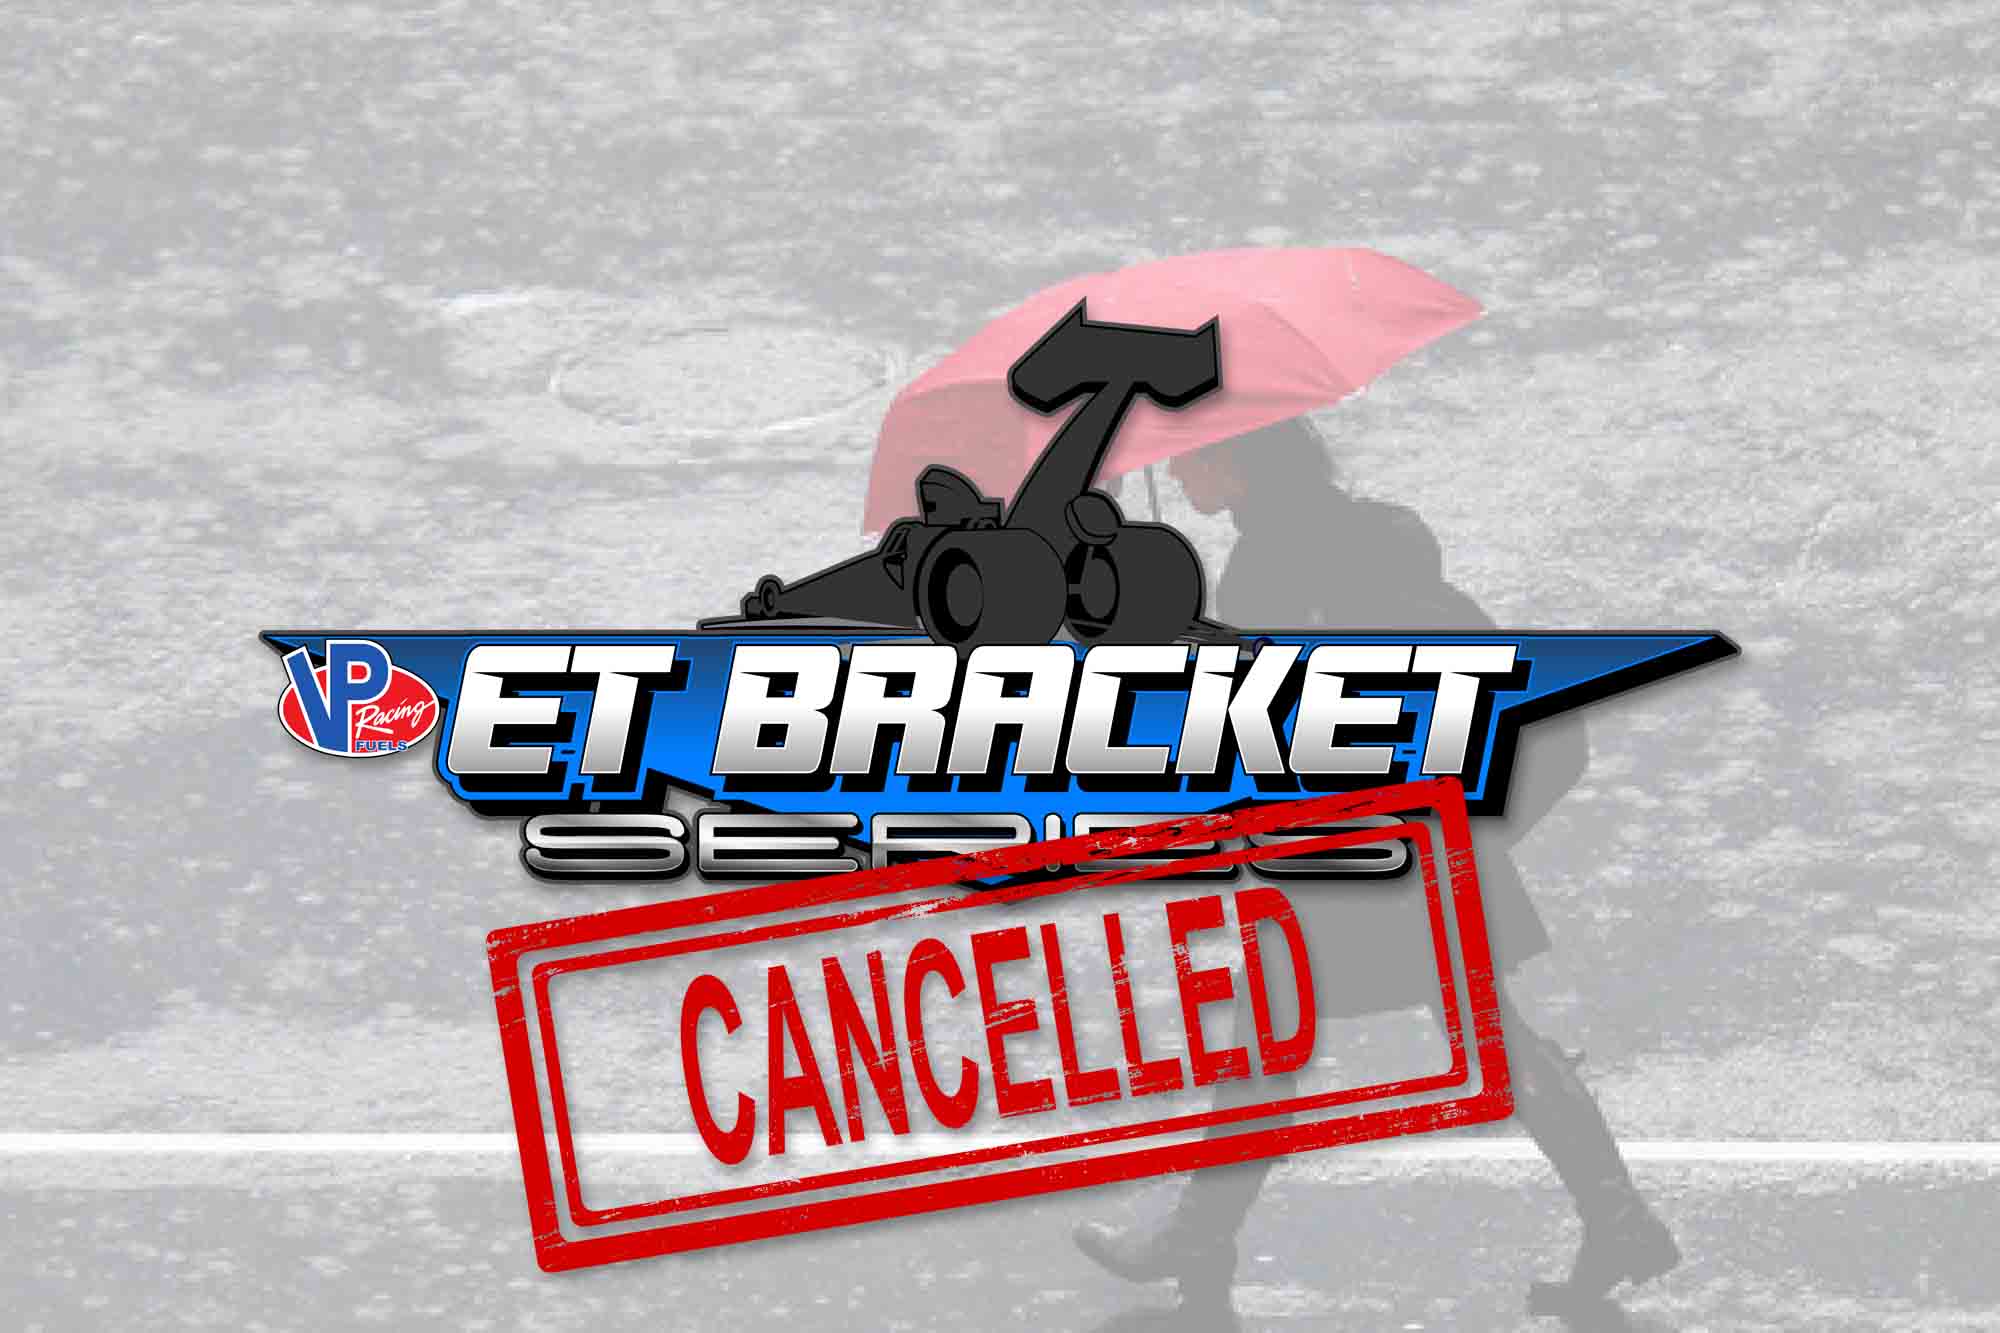 Rains Force Cancellation of VP Racing Fuels ET Bracket Series